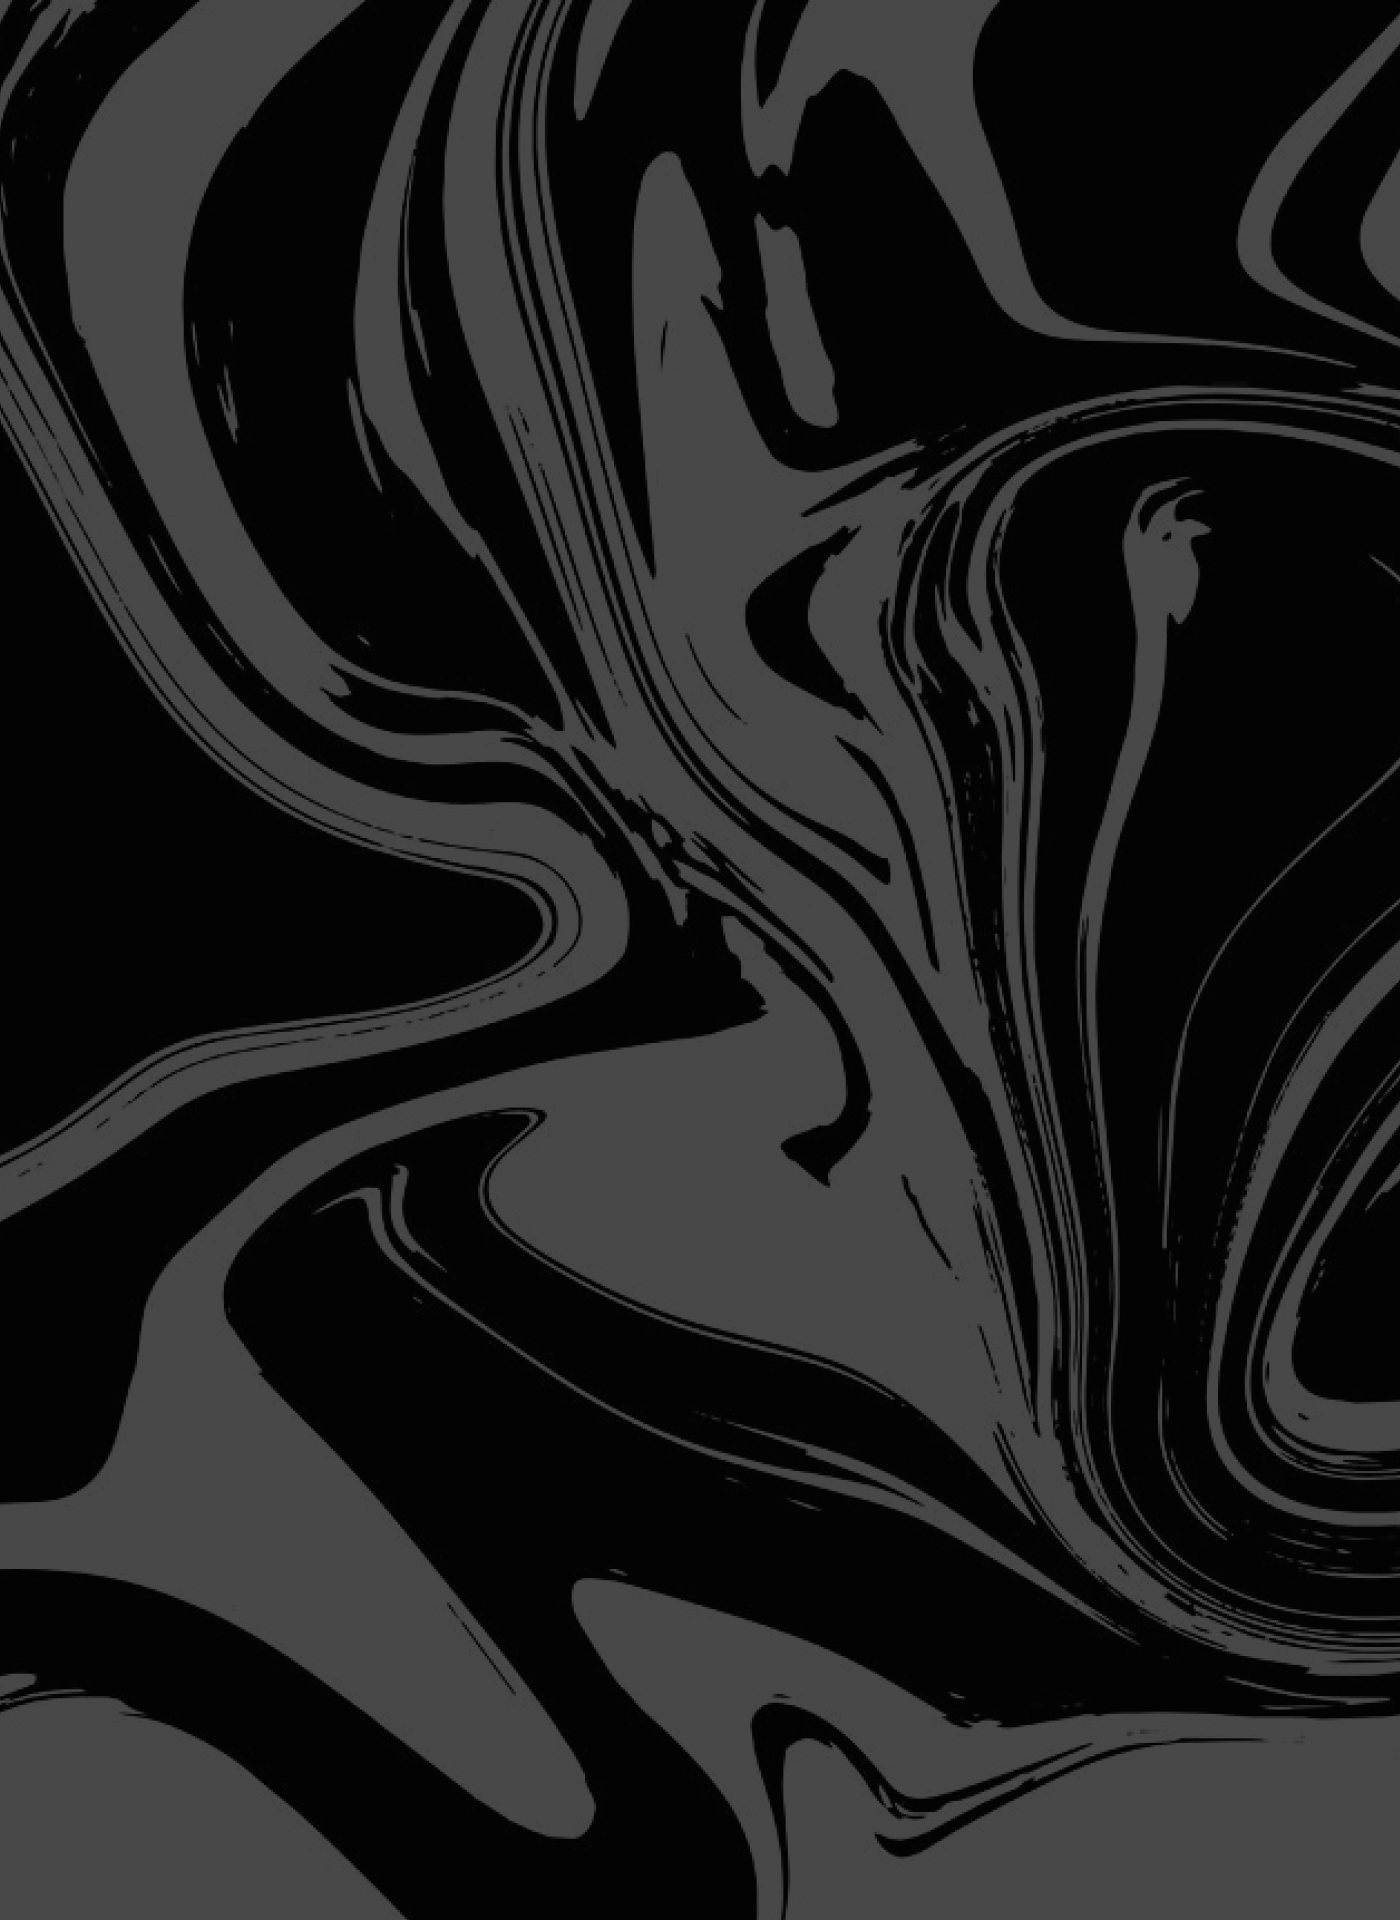 black background pattern